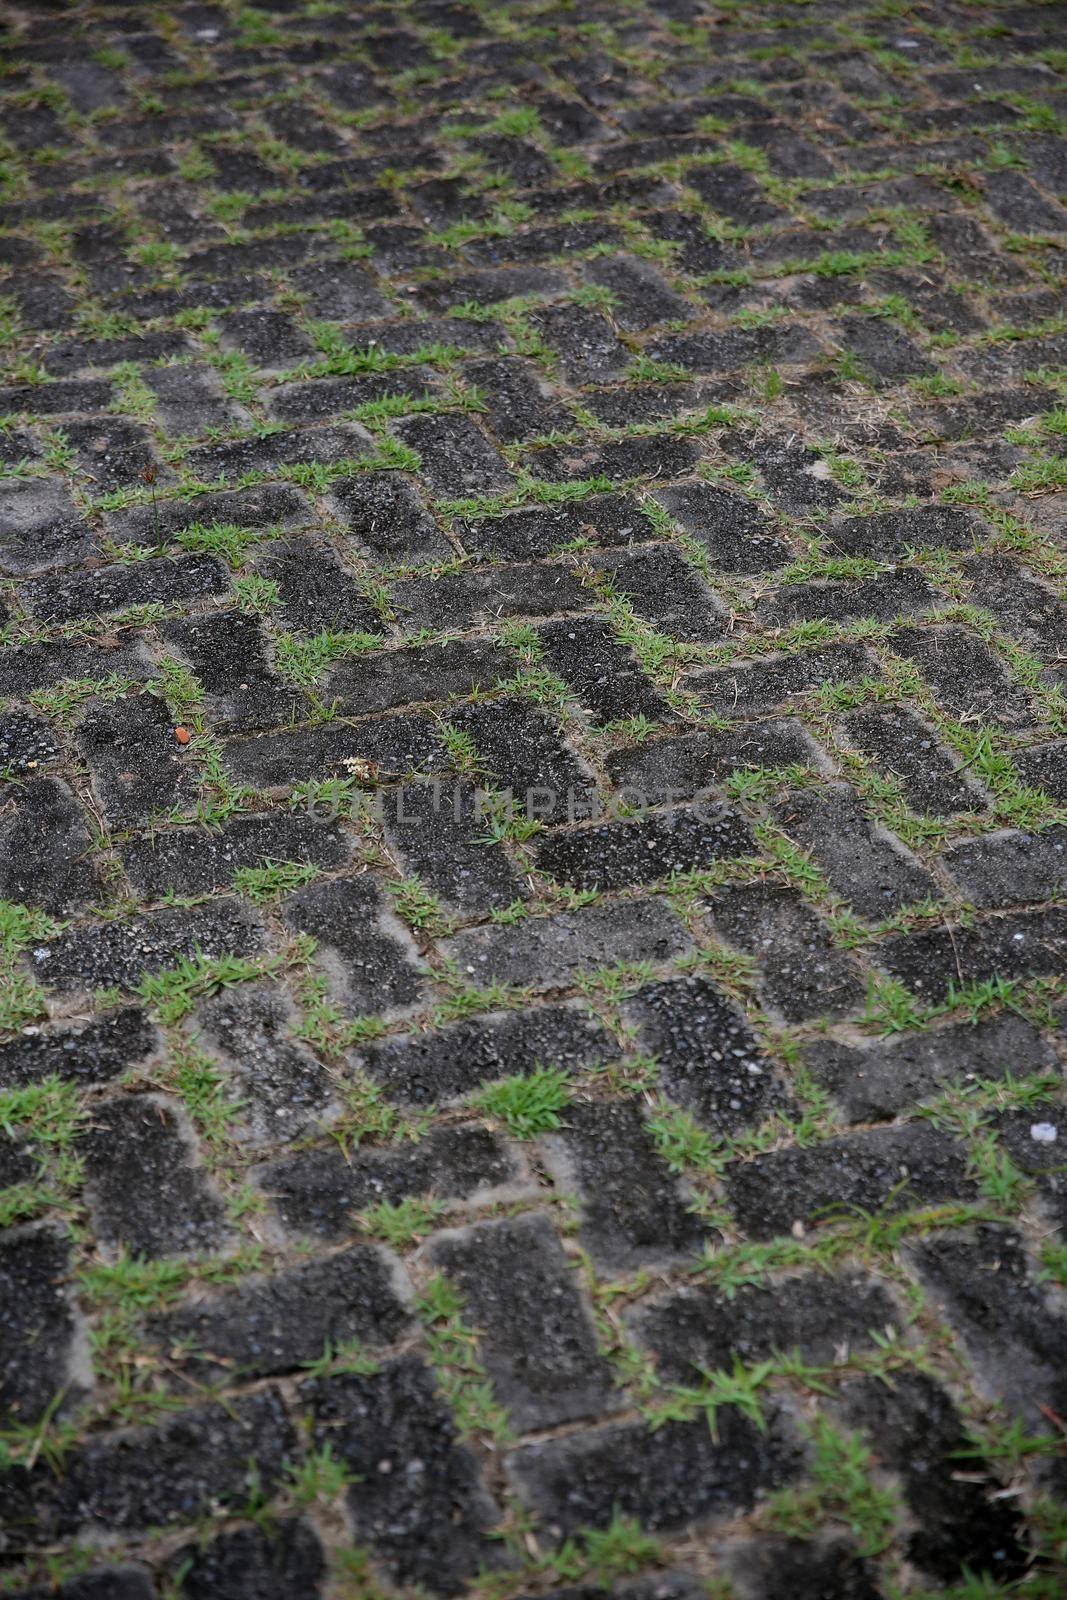 pavement made of concrete bricks by joasouza